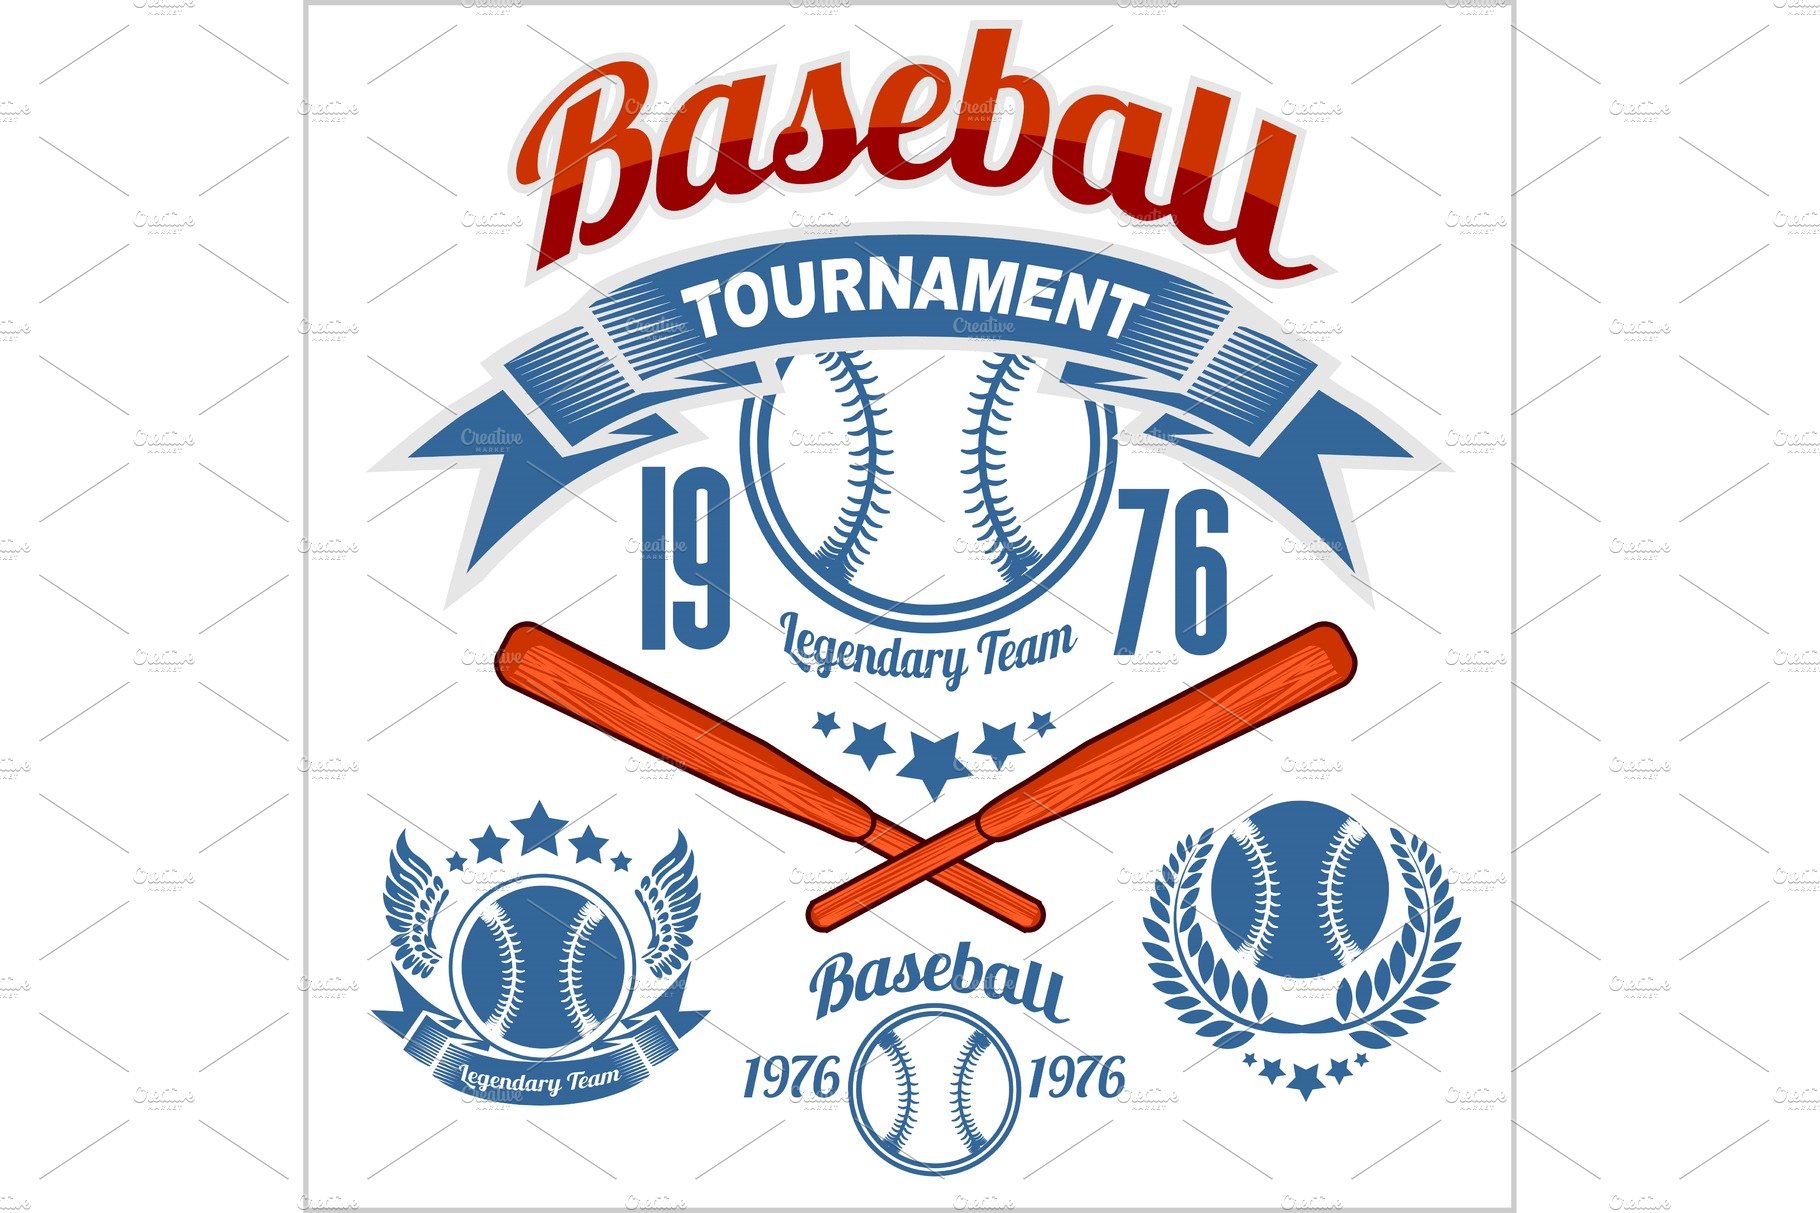 American baseball emblem cover image.